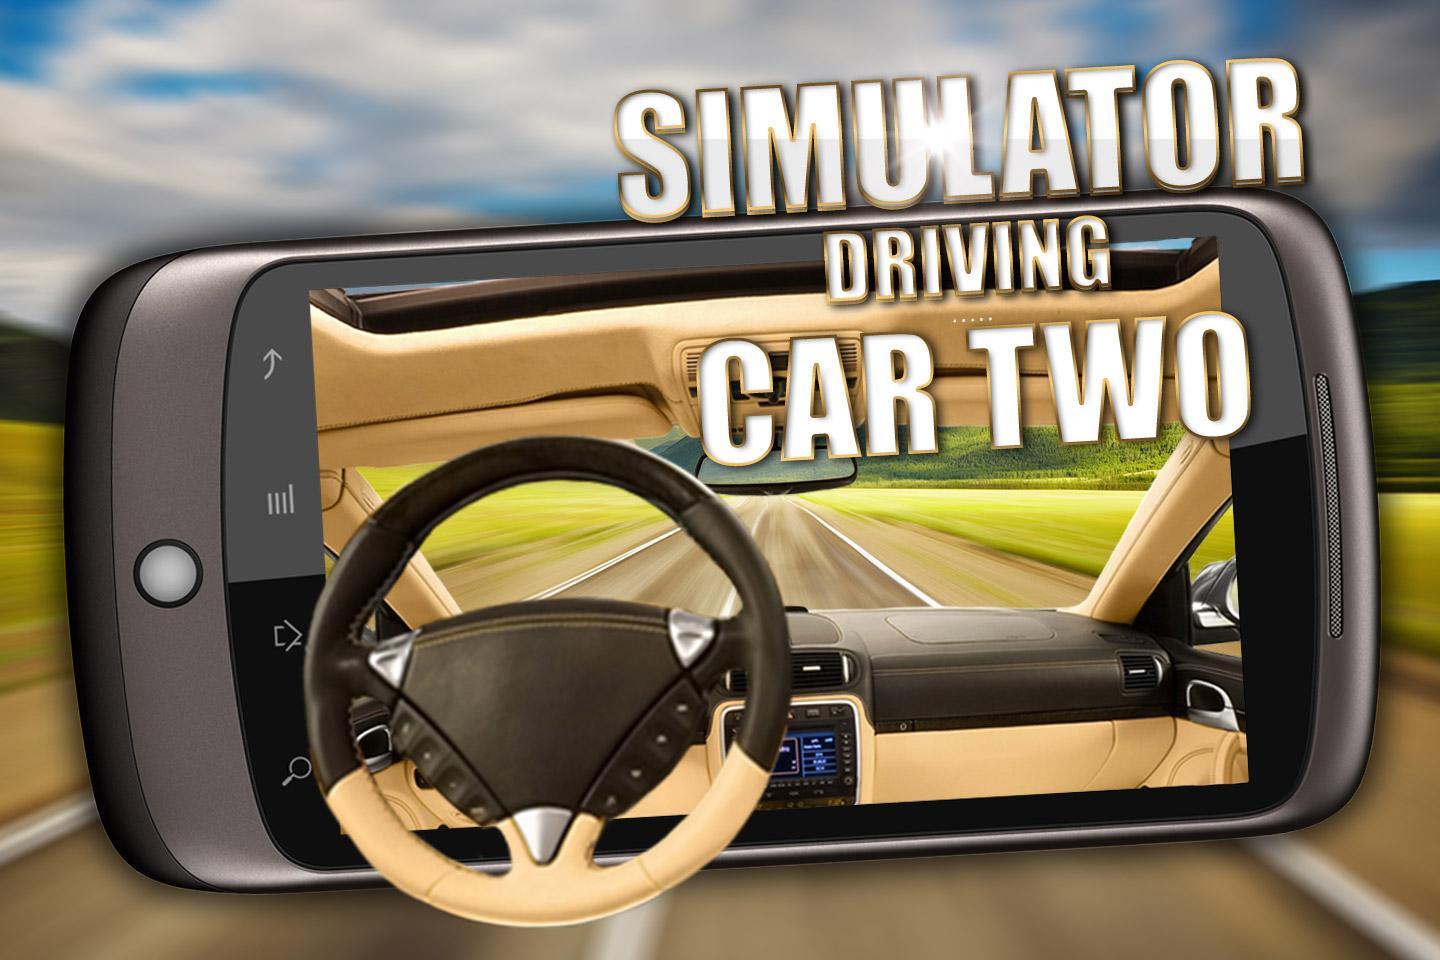 Ucds car driving simulator. Симулятор вождения автомобиля. Симулятор вождения автомобиля на андроид. Диск car Simulator 2. Детский симулятор вождения автомобиля.